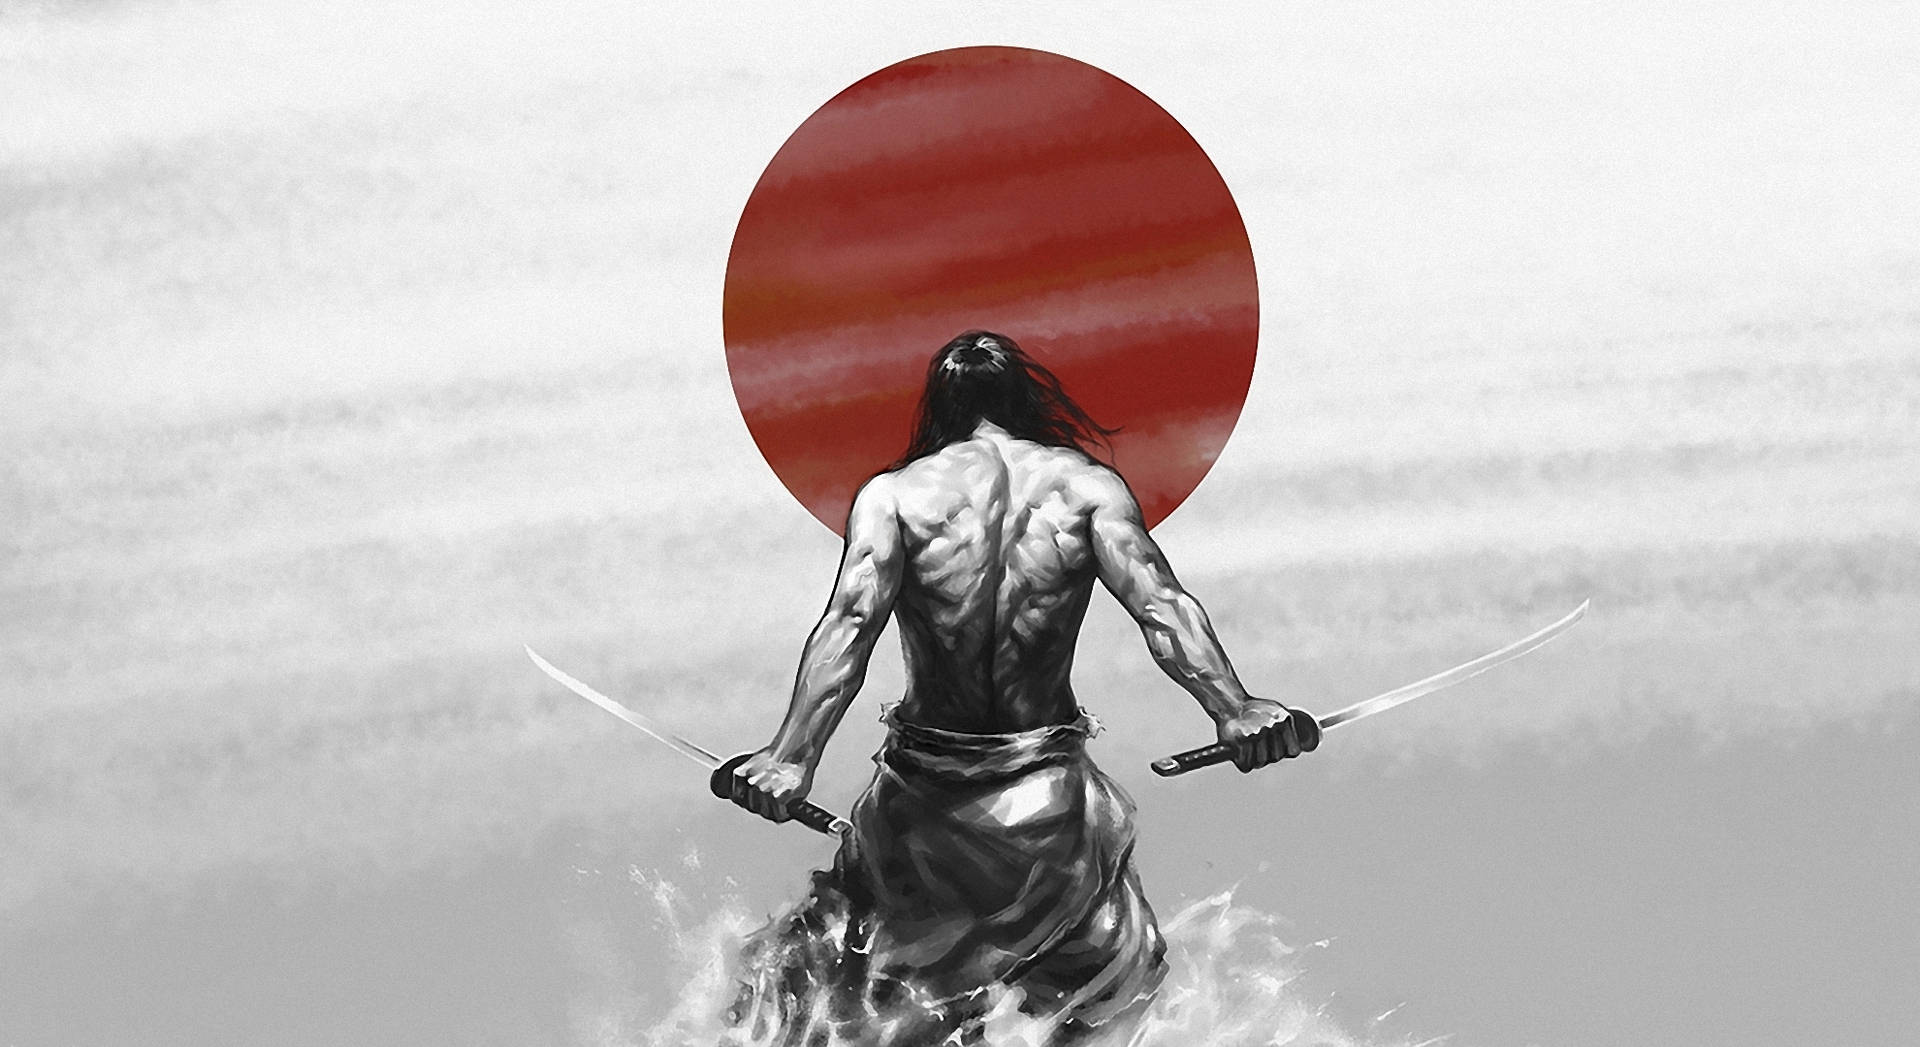 Free Samurai Wallpaper Downloads, [100+] Samurai Wallpapers for FREE |  